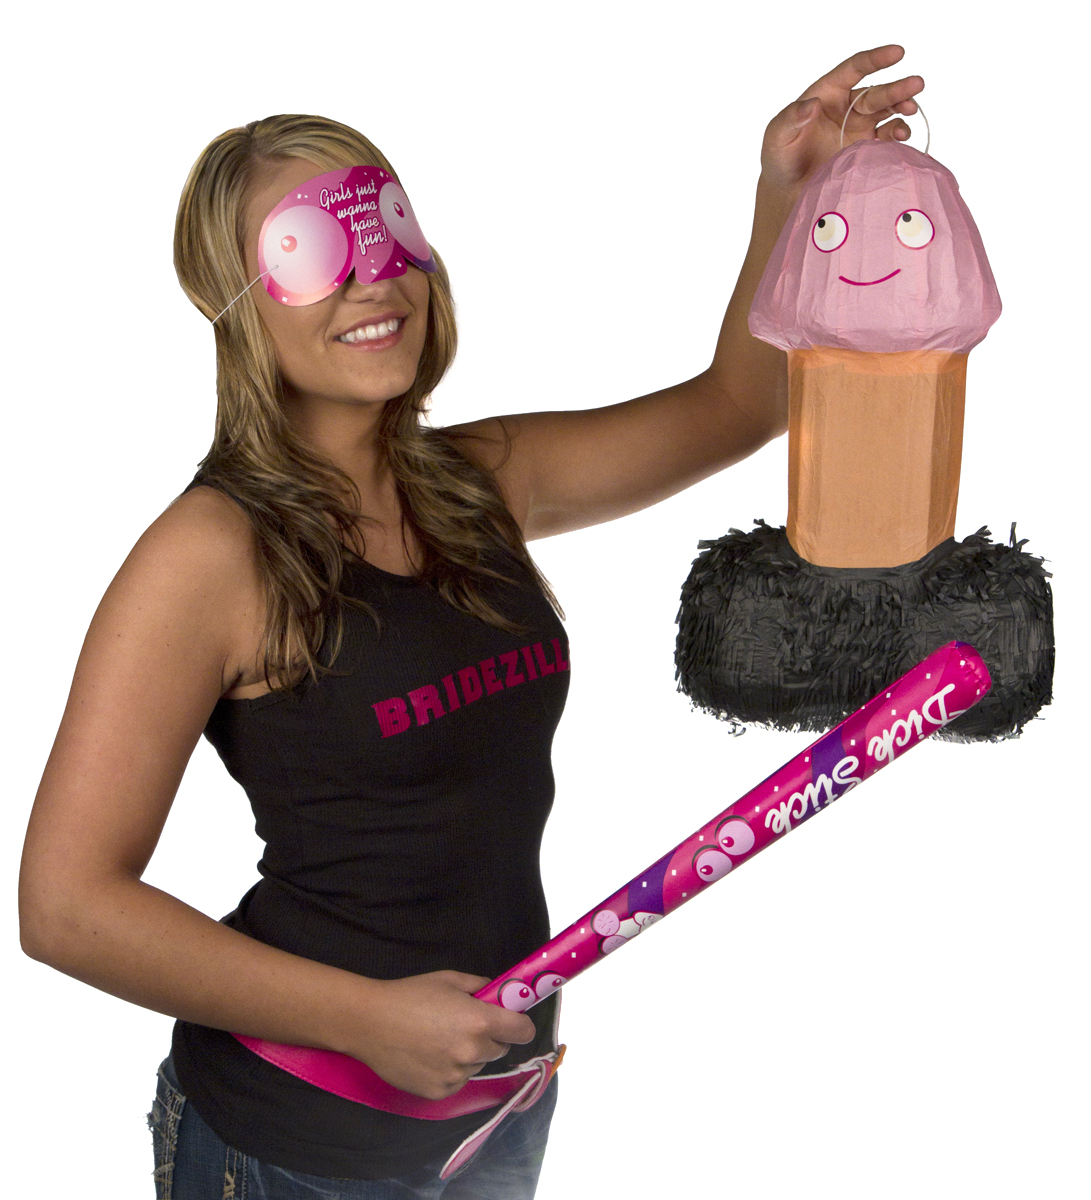 The Penis Piñata Kit by Bachelorette.com